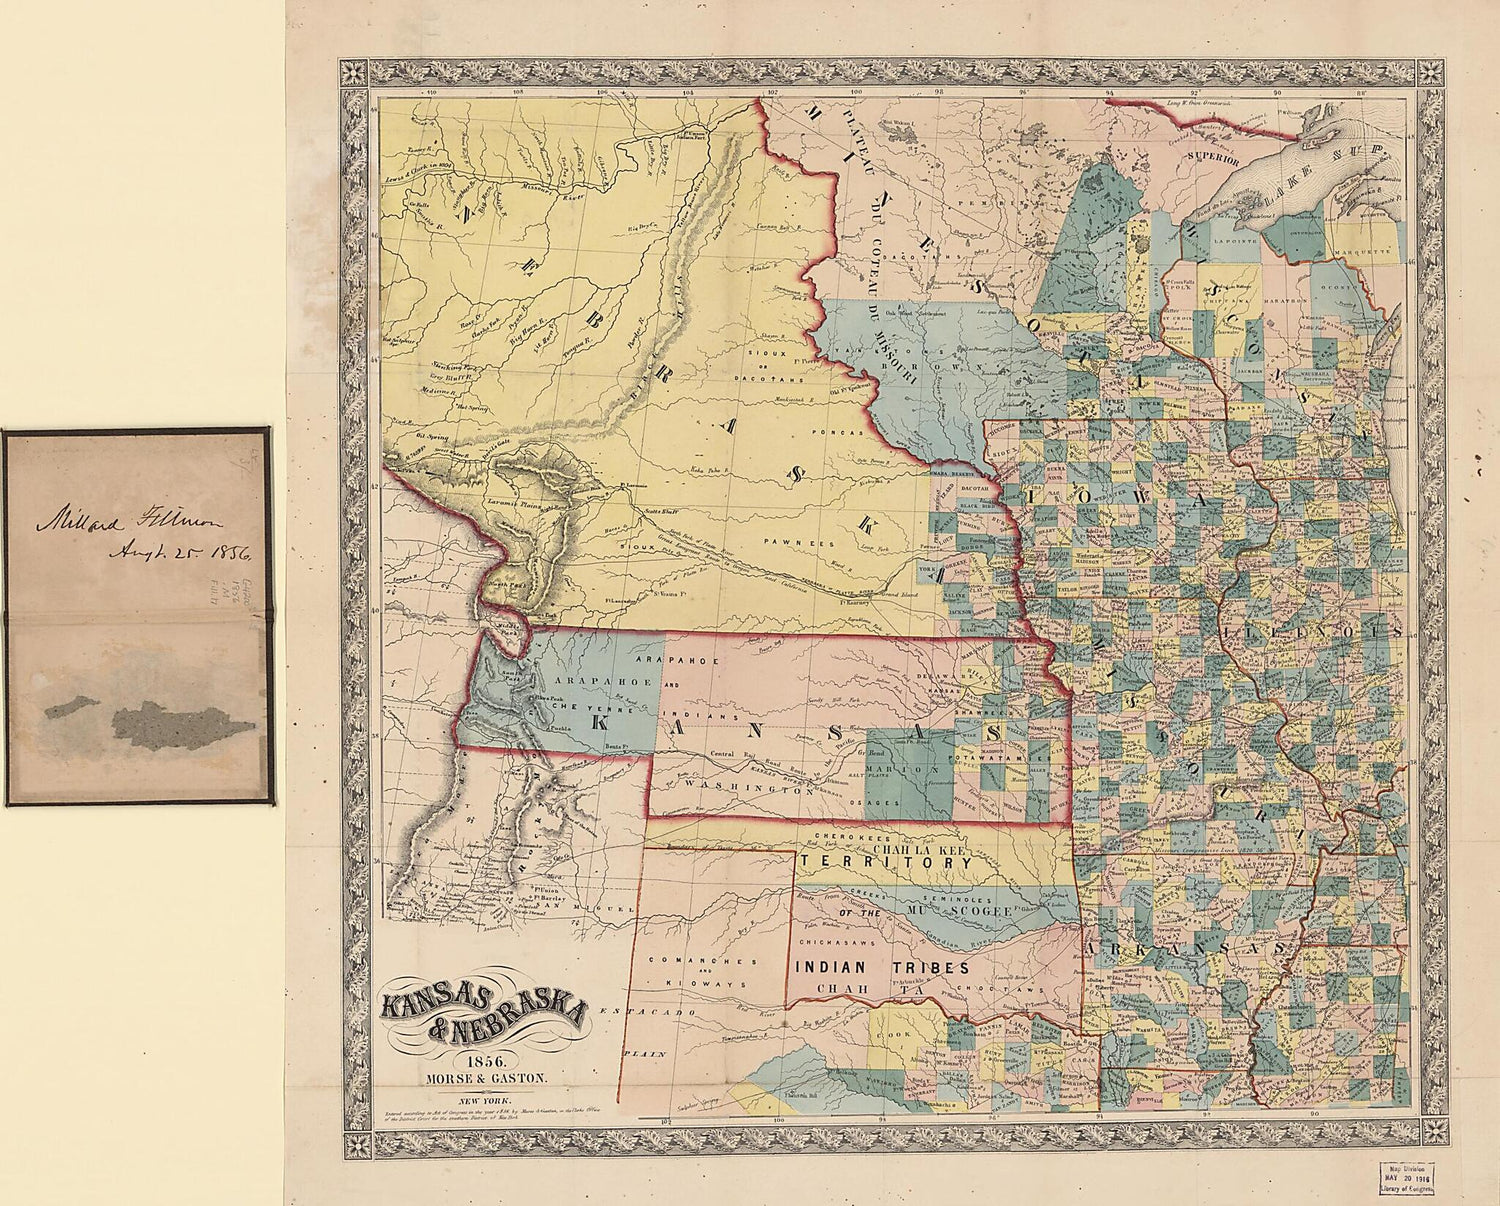 This old map of Kansas &amp; Nebraska. (Kansas and Nebraska) from 1856 was created by Millard Fillmore,  Morse &amp; Gaston in 1856